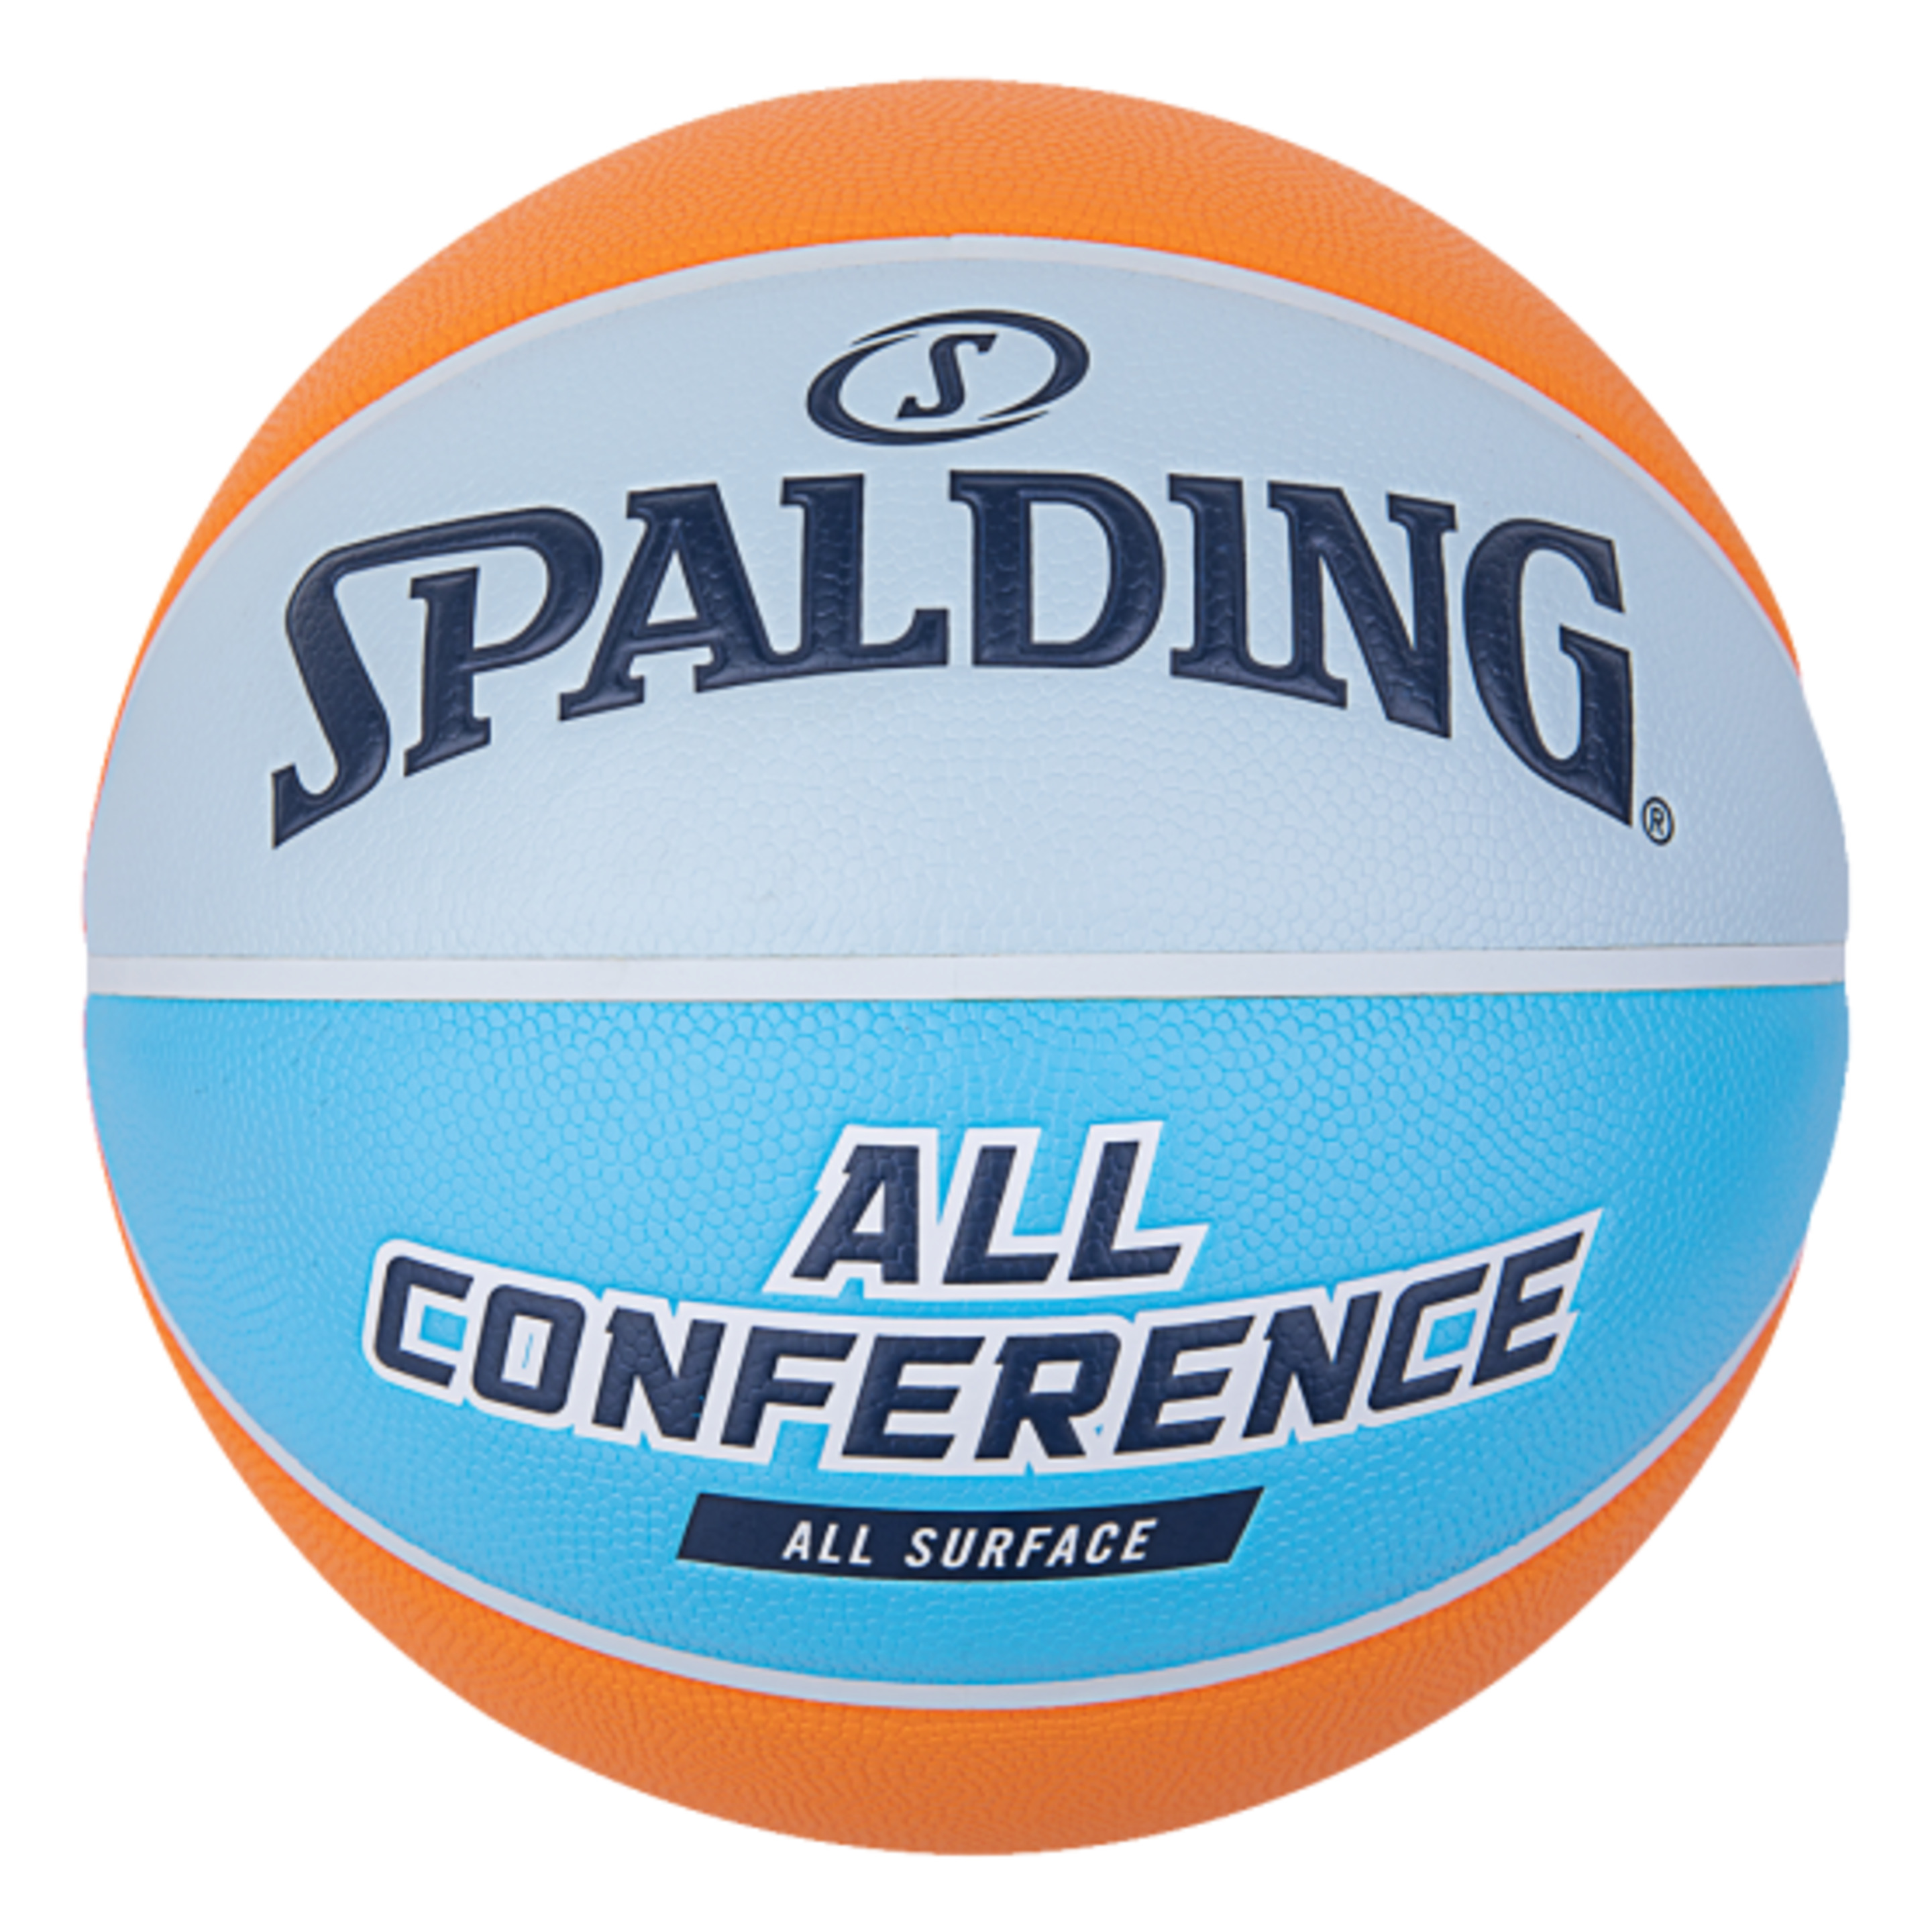 Spalding Marble All Conference Basquetebol Laranja Azul Sz7 - azul-naranja - 